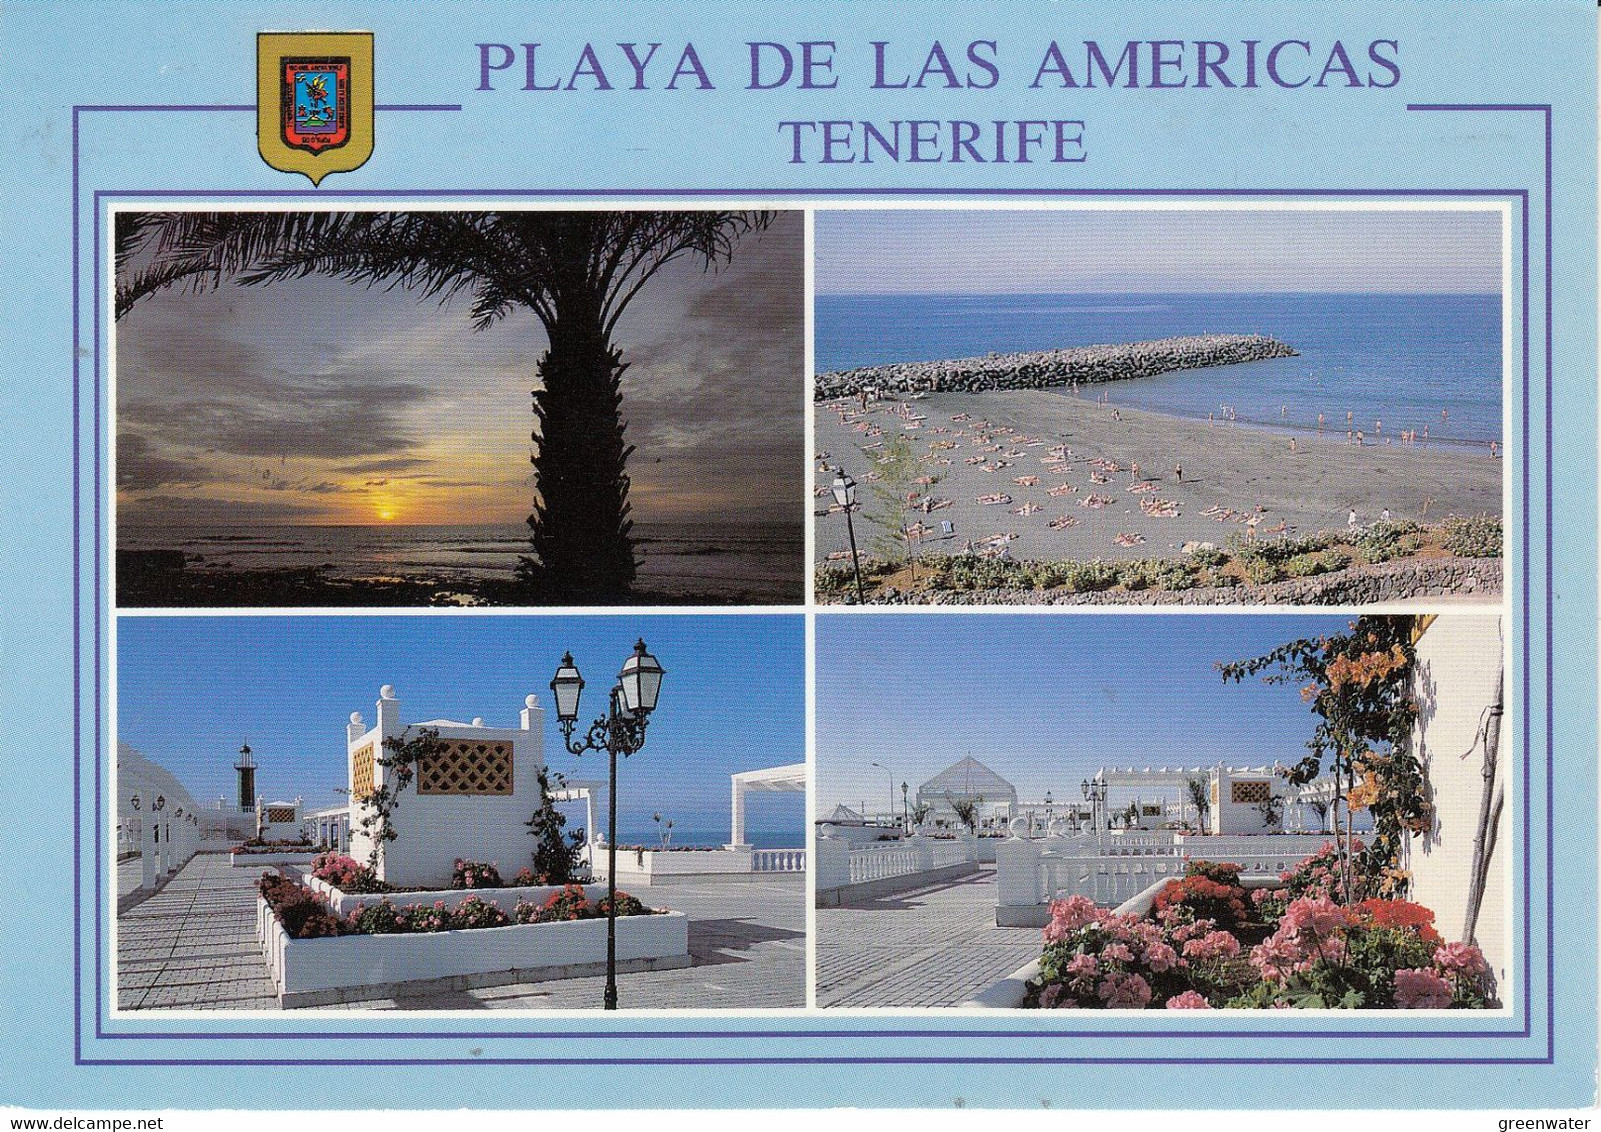 Spain 1995 Antarctic Treaty Stamp On Postcard Tenerife  Used 13 Ene 95  (57528C) - Antarktisvertrag